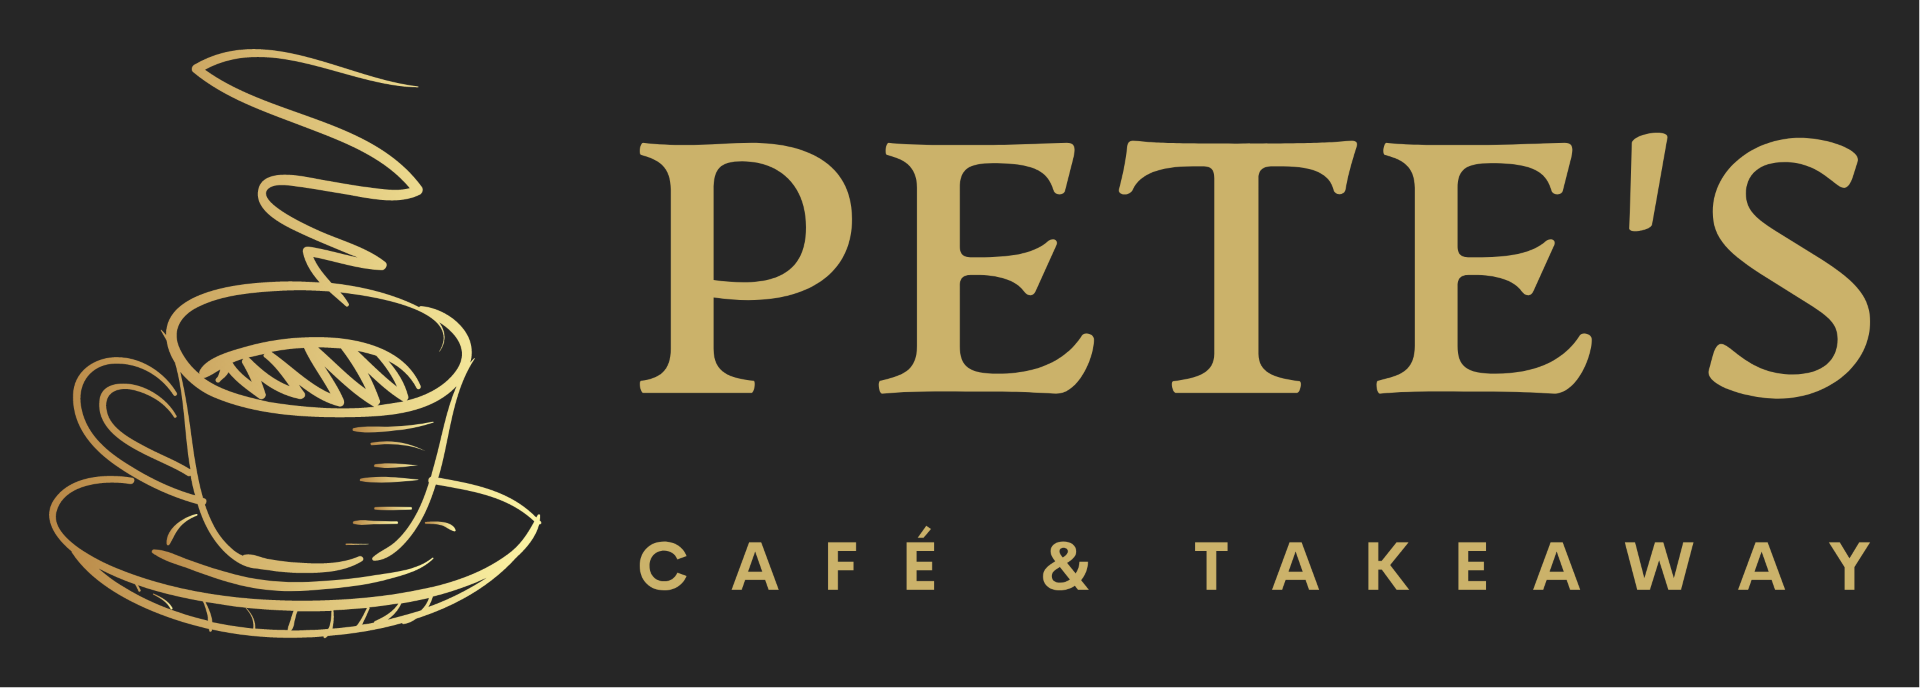 Pete's Cafe & Takeaway Logo